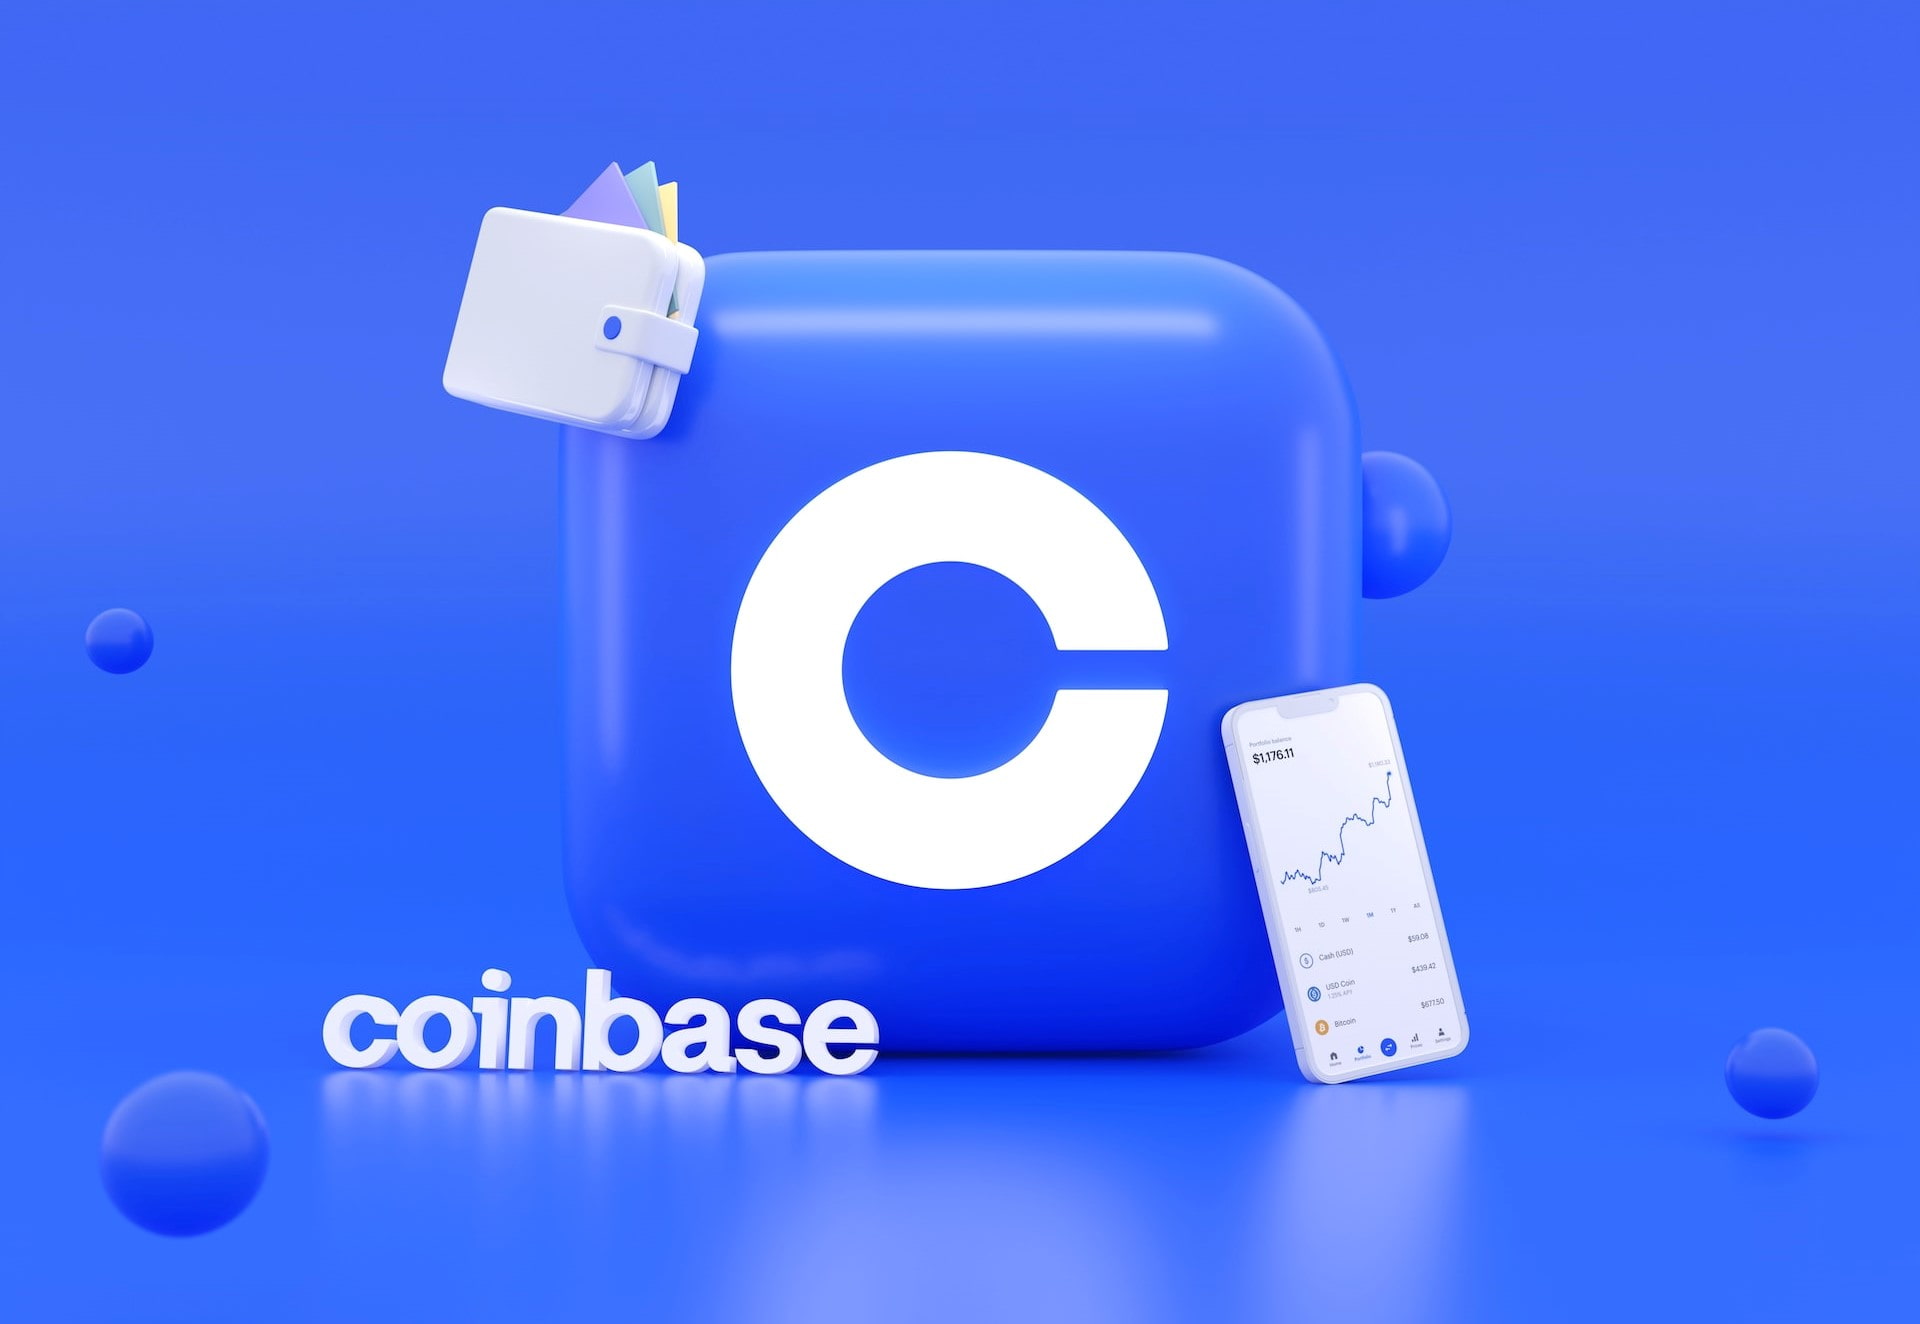 coinbase-unsplash